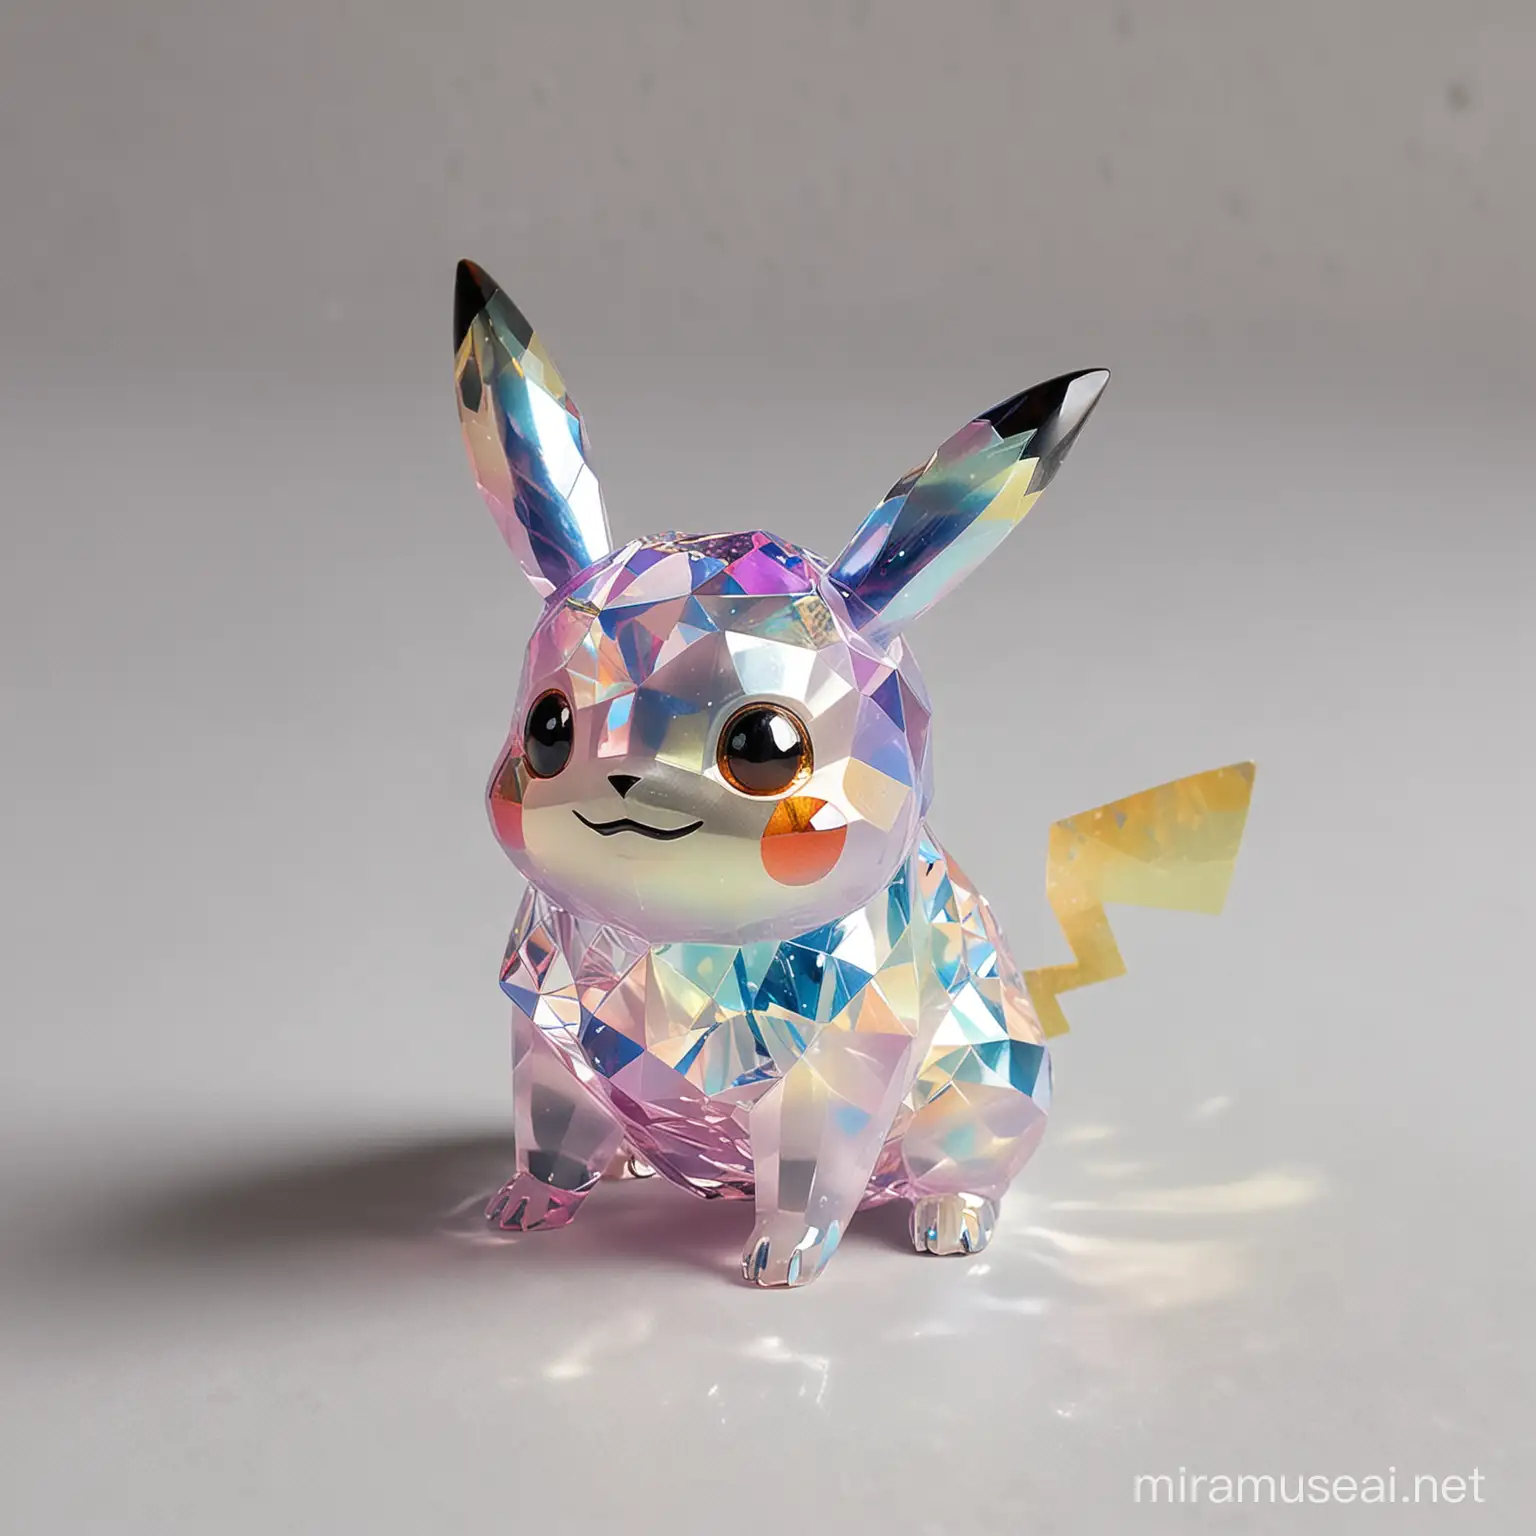 Produce a shiny iridescent crystal Pikachu 